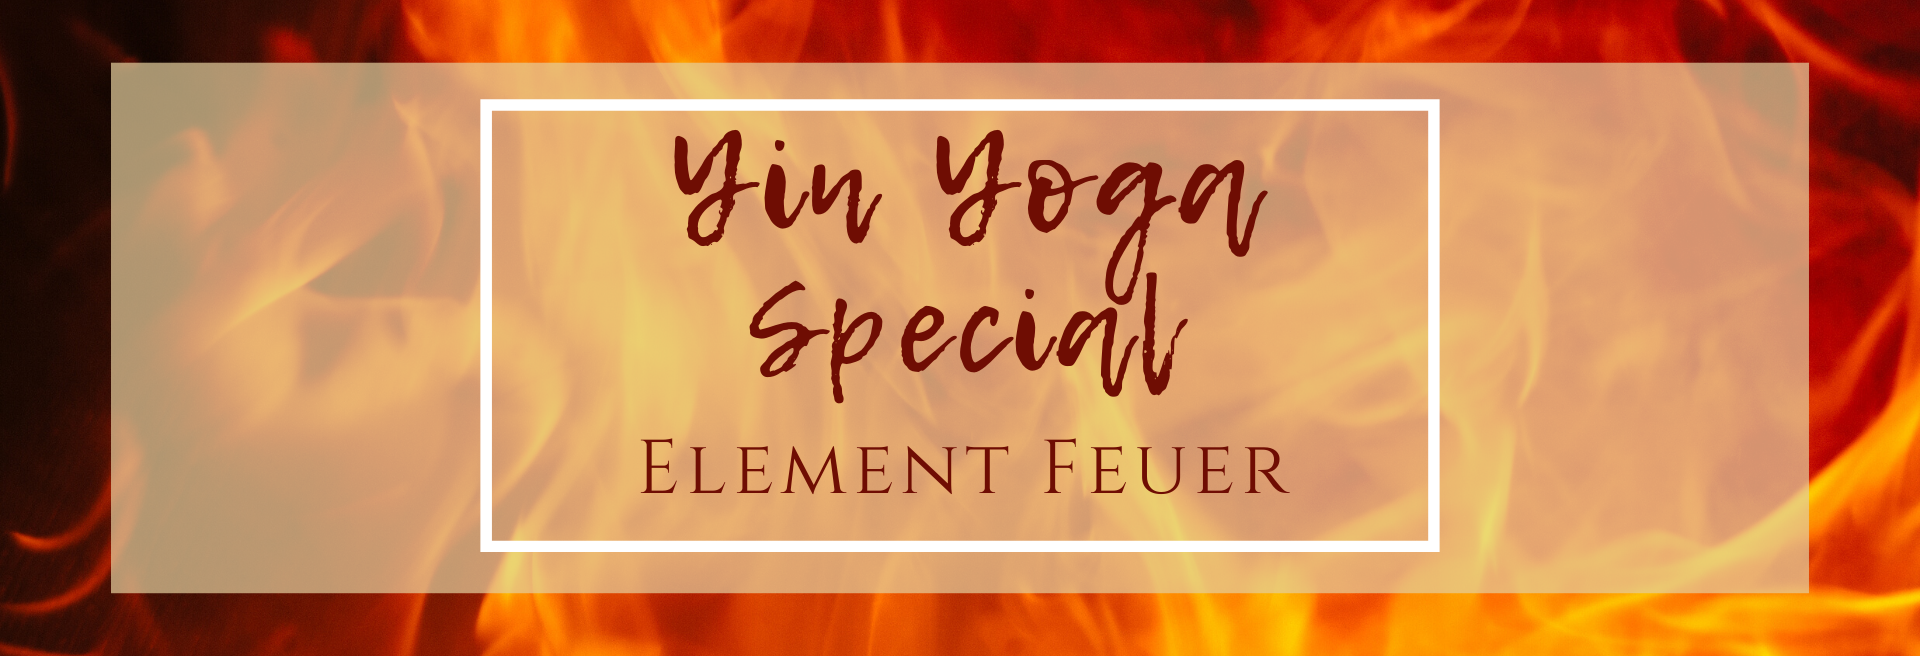 Yin Yoga Special Element Feuer